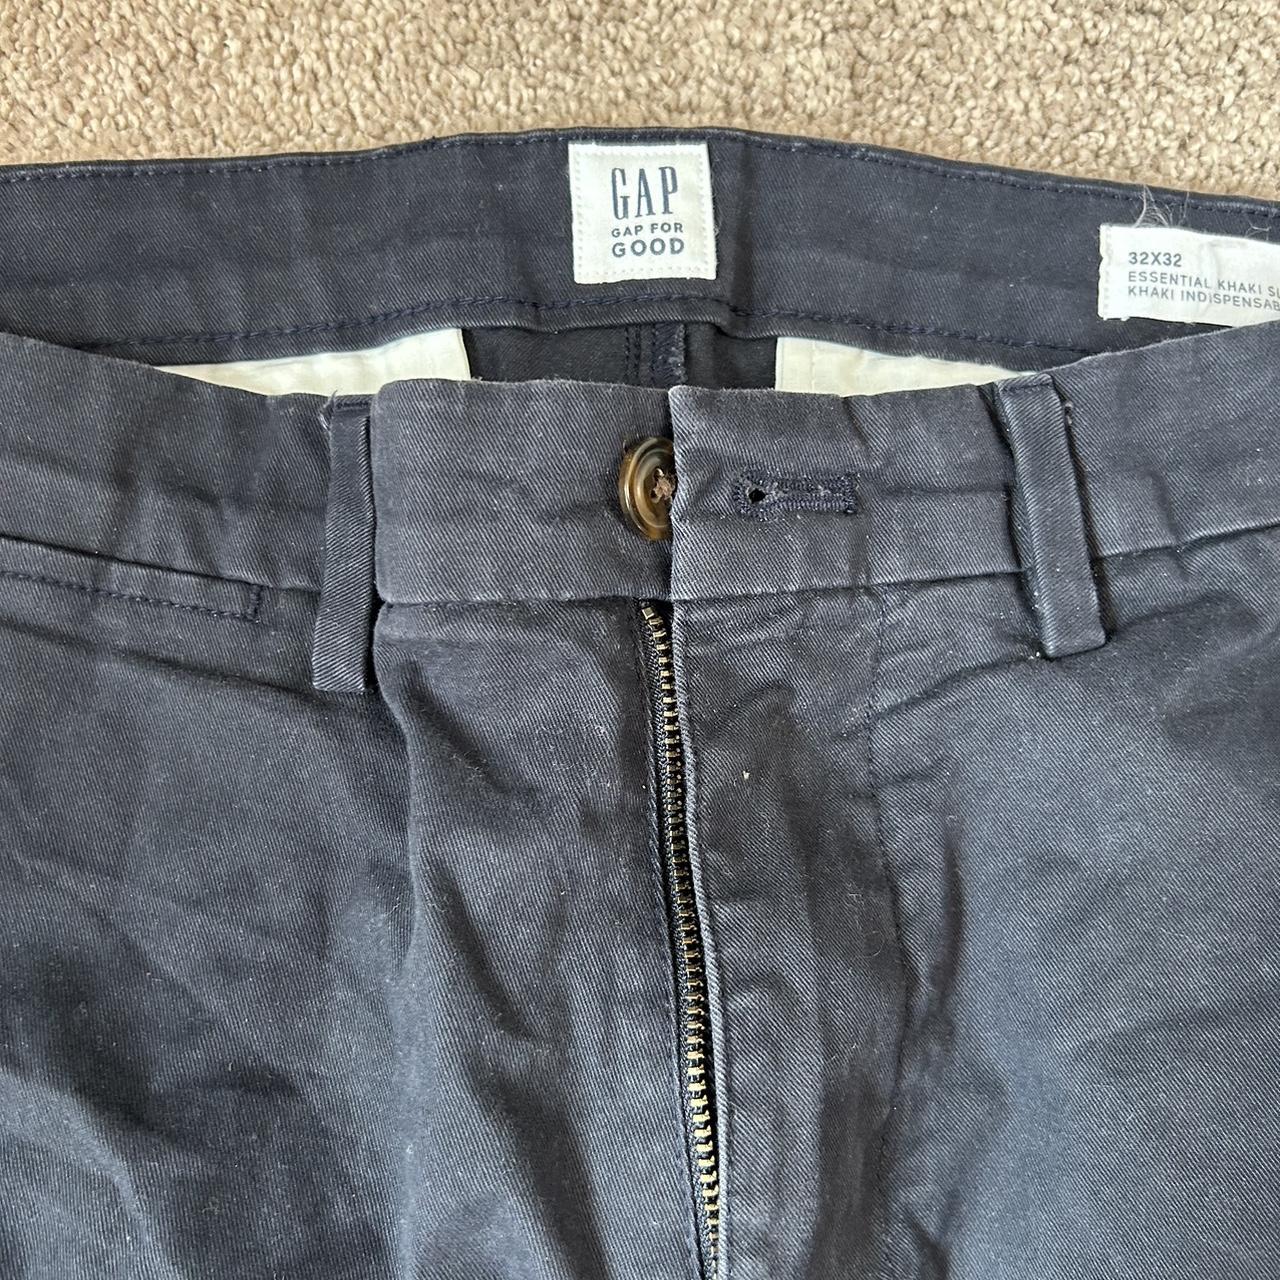 mens plain navy blue gap jeans - Depop